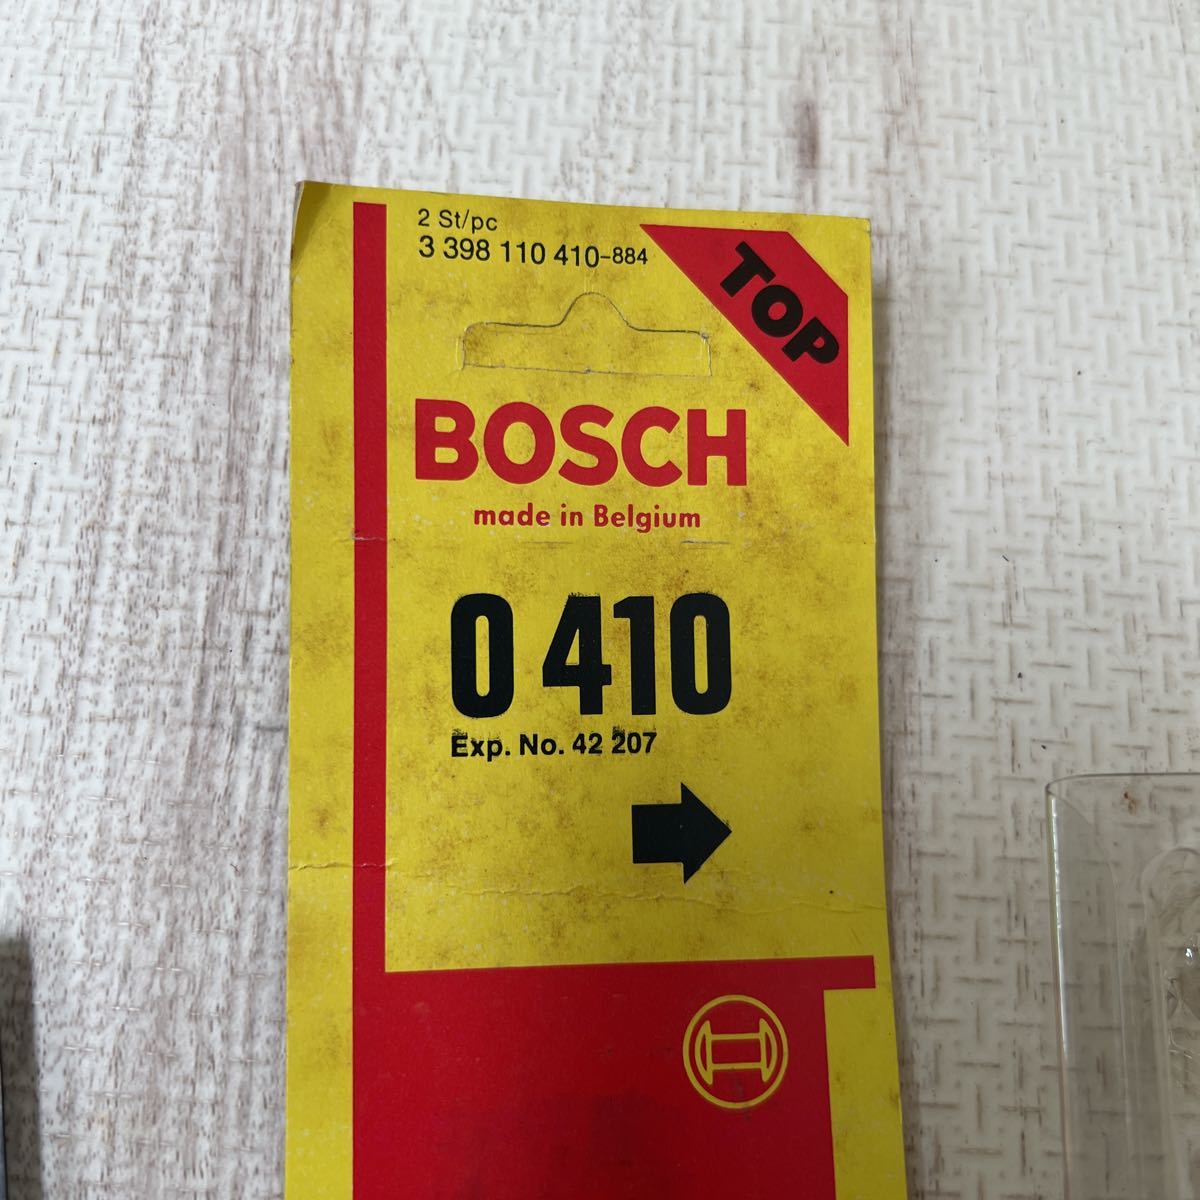 ［100918］BOSCH ワイパーブレード　0 410 ベルギー　適応車種は画像にあります_画像6